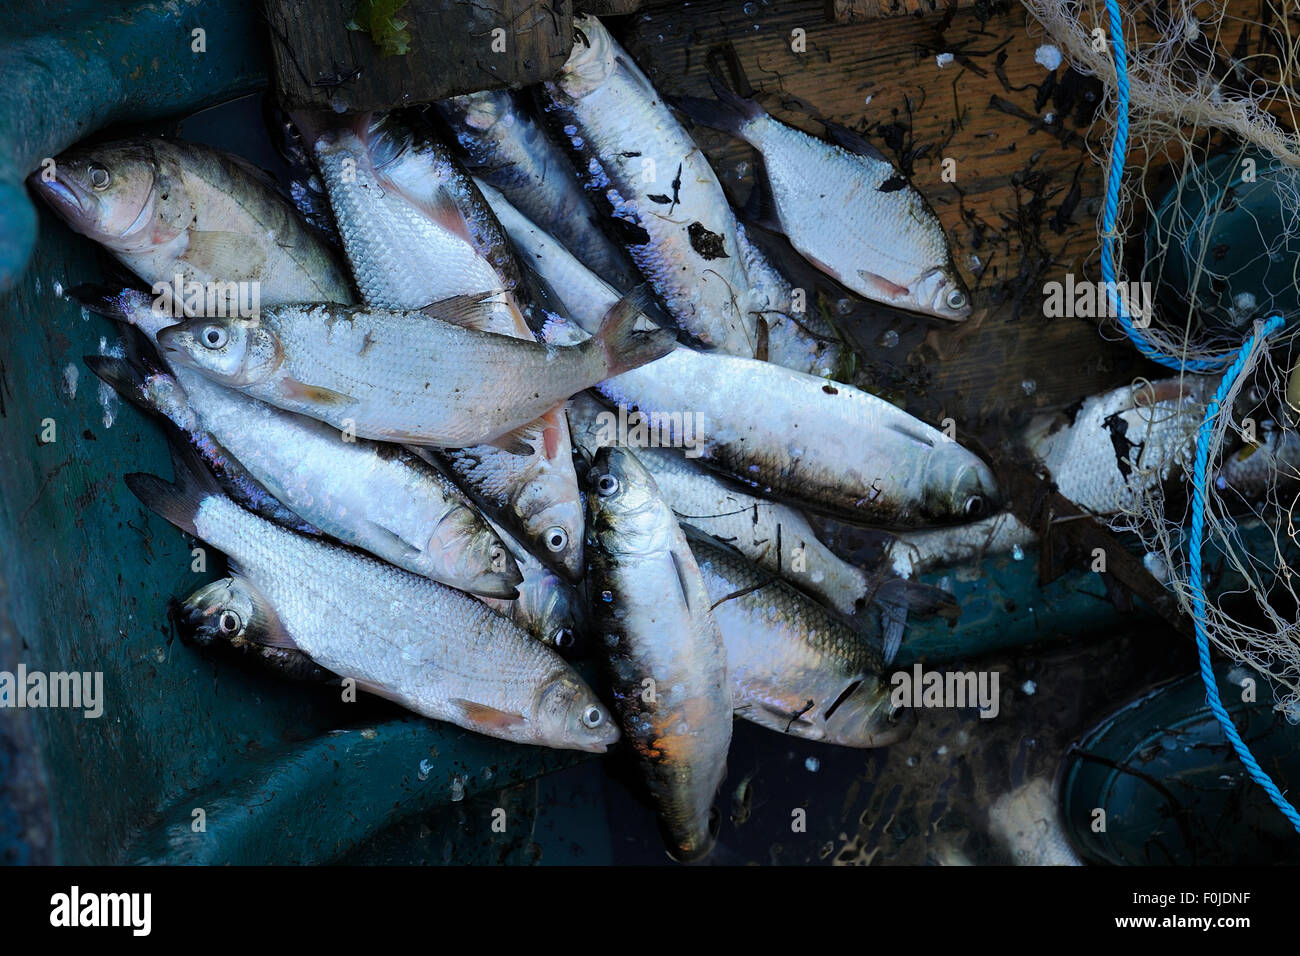 Pontic shad / Danube mackerel (Alosa pontica) and Chinese grass carp (left), fish catch in Sfinthus Gheorghe, Danube delta rewilding area, Romania Stock Photo